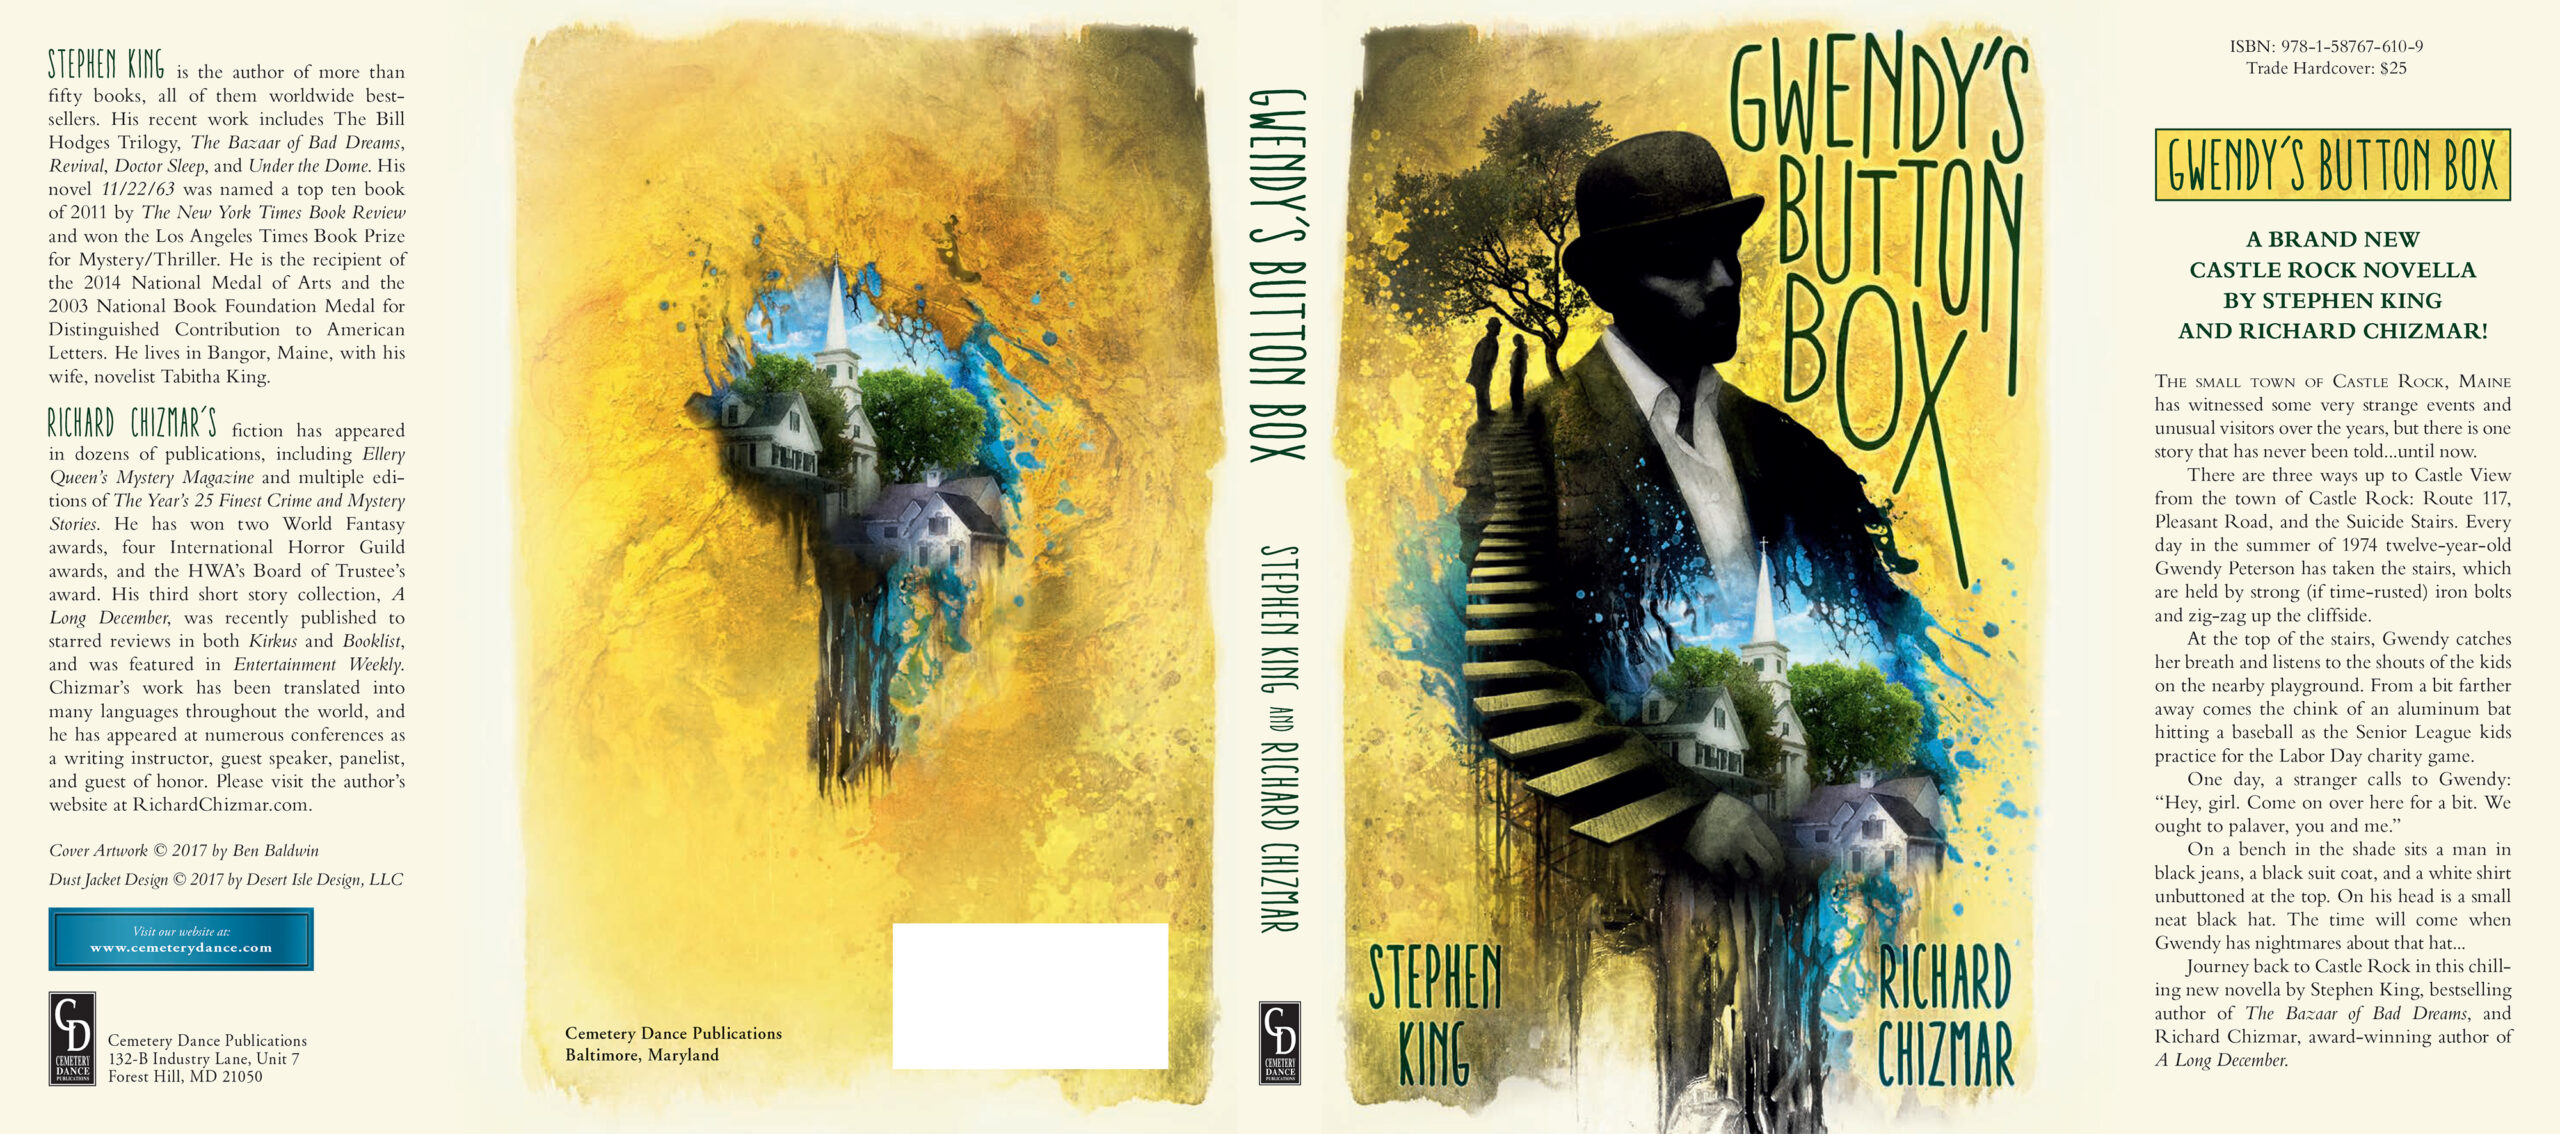 gwendys-button-box--stephenking--richard-chizmar--fullcover